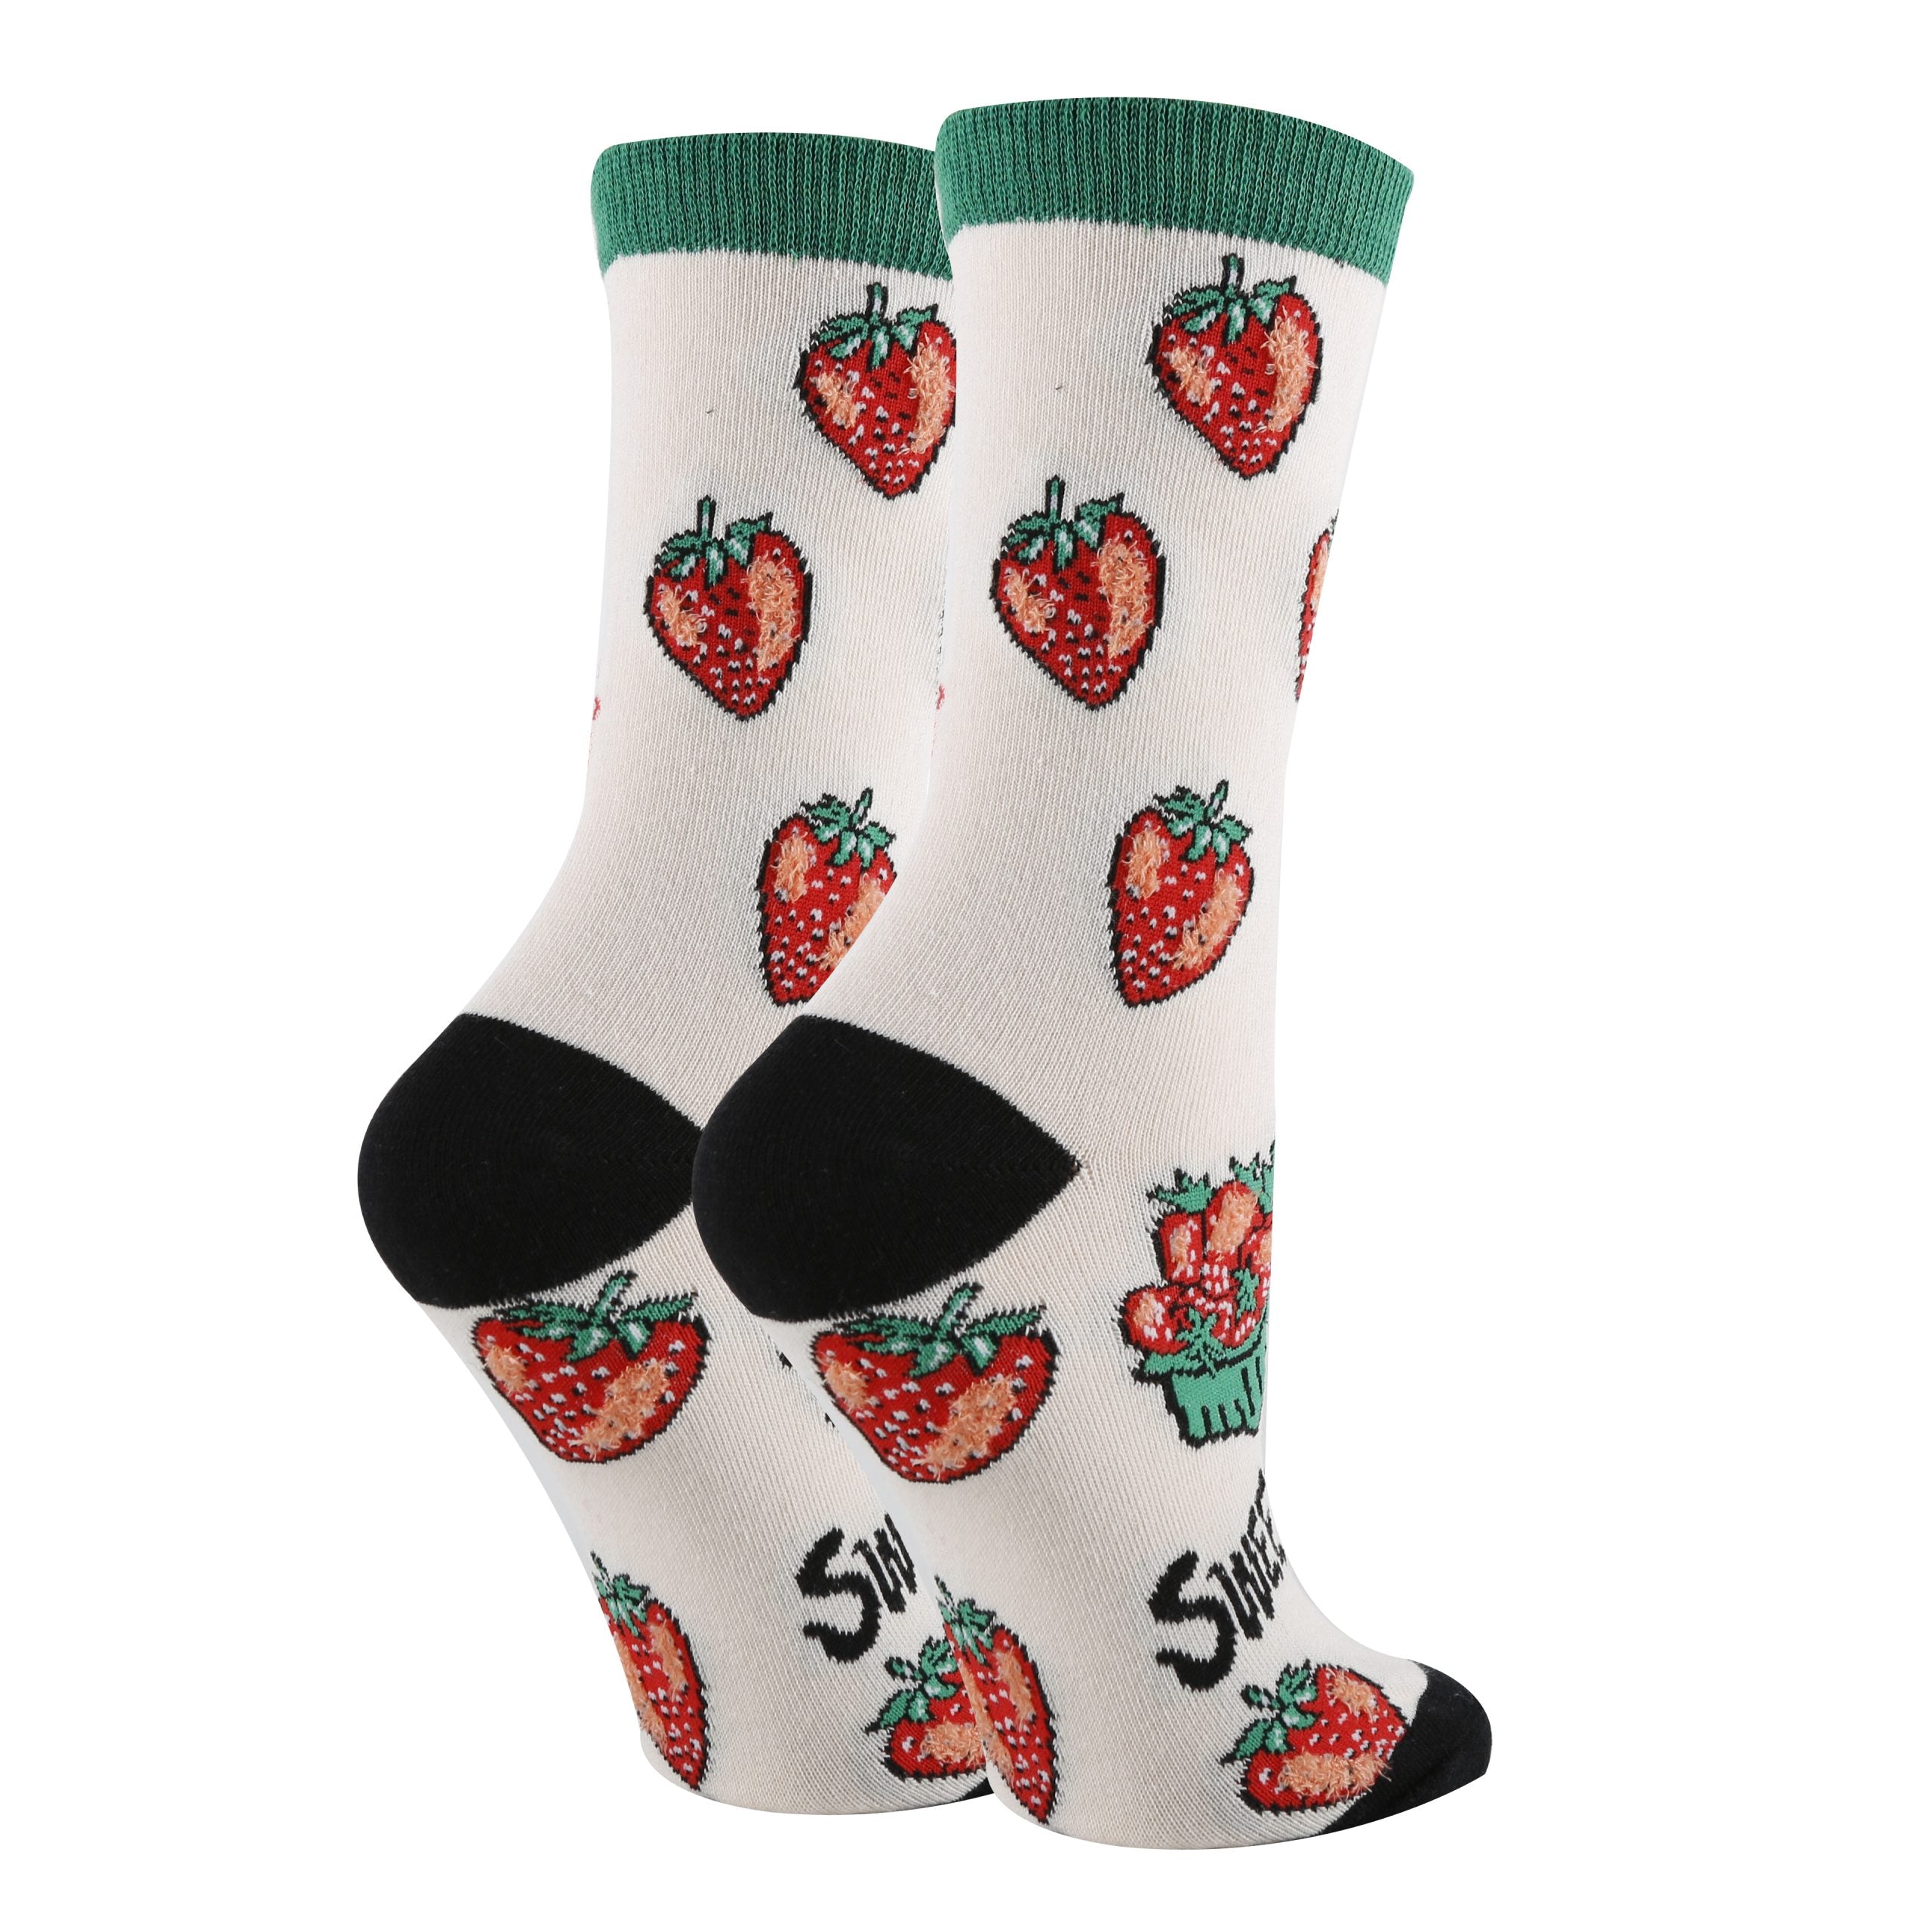 Berry Good Socks